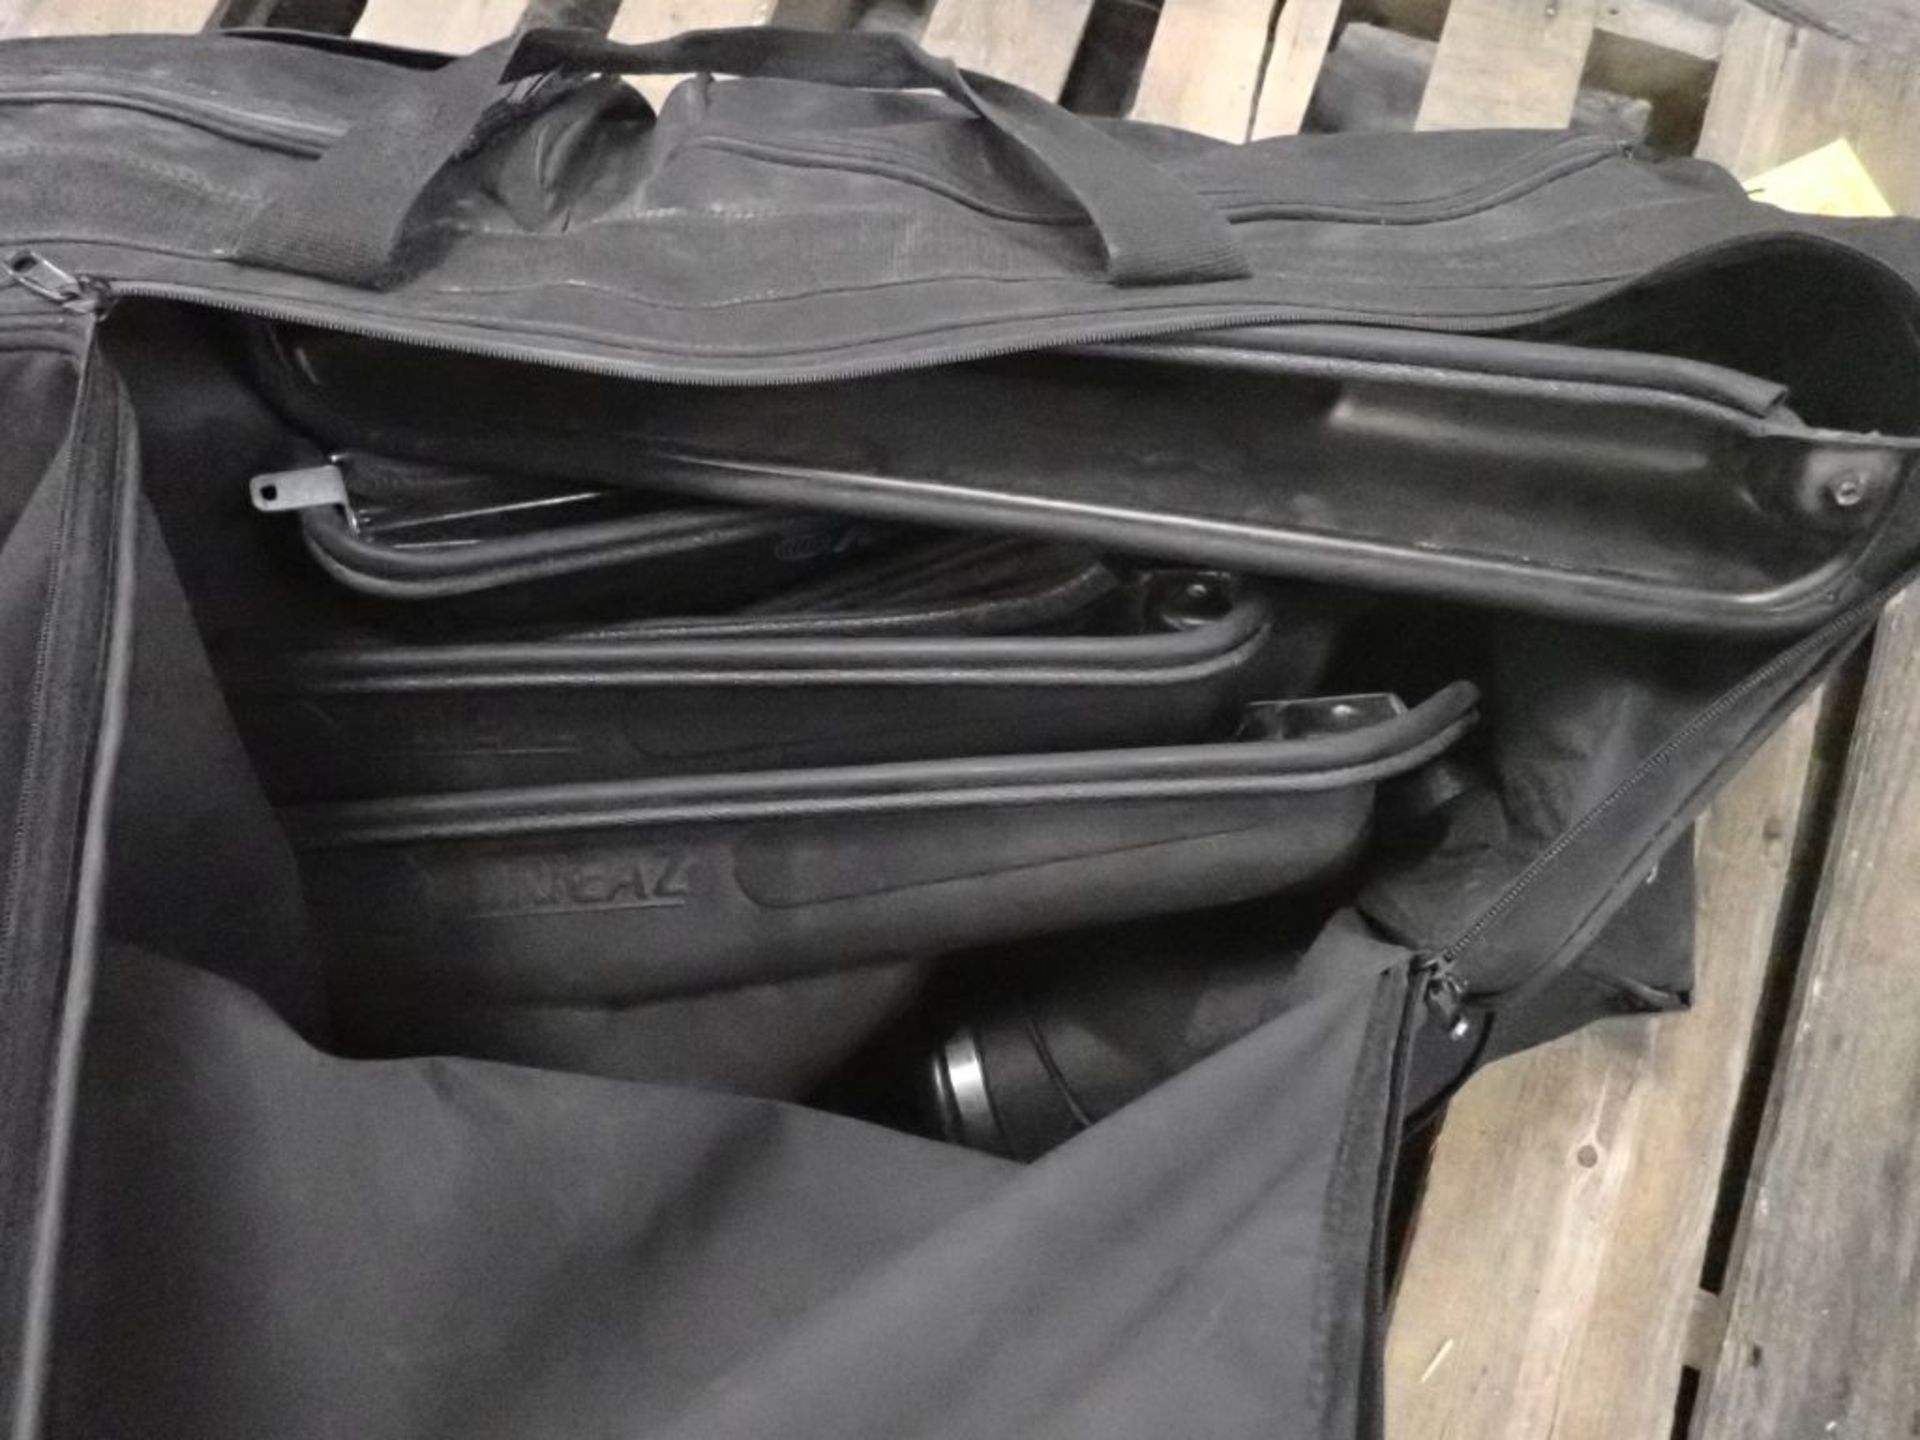 Drieaze Portable Duffle Bag - Image 3 of 5